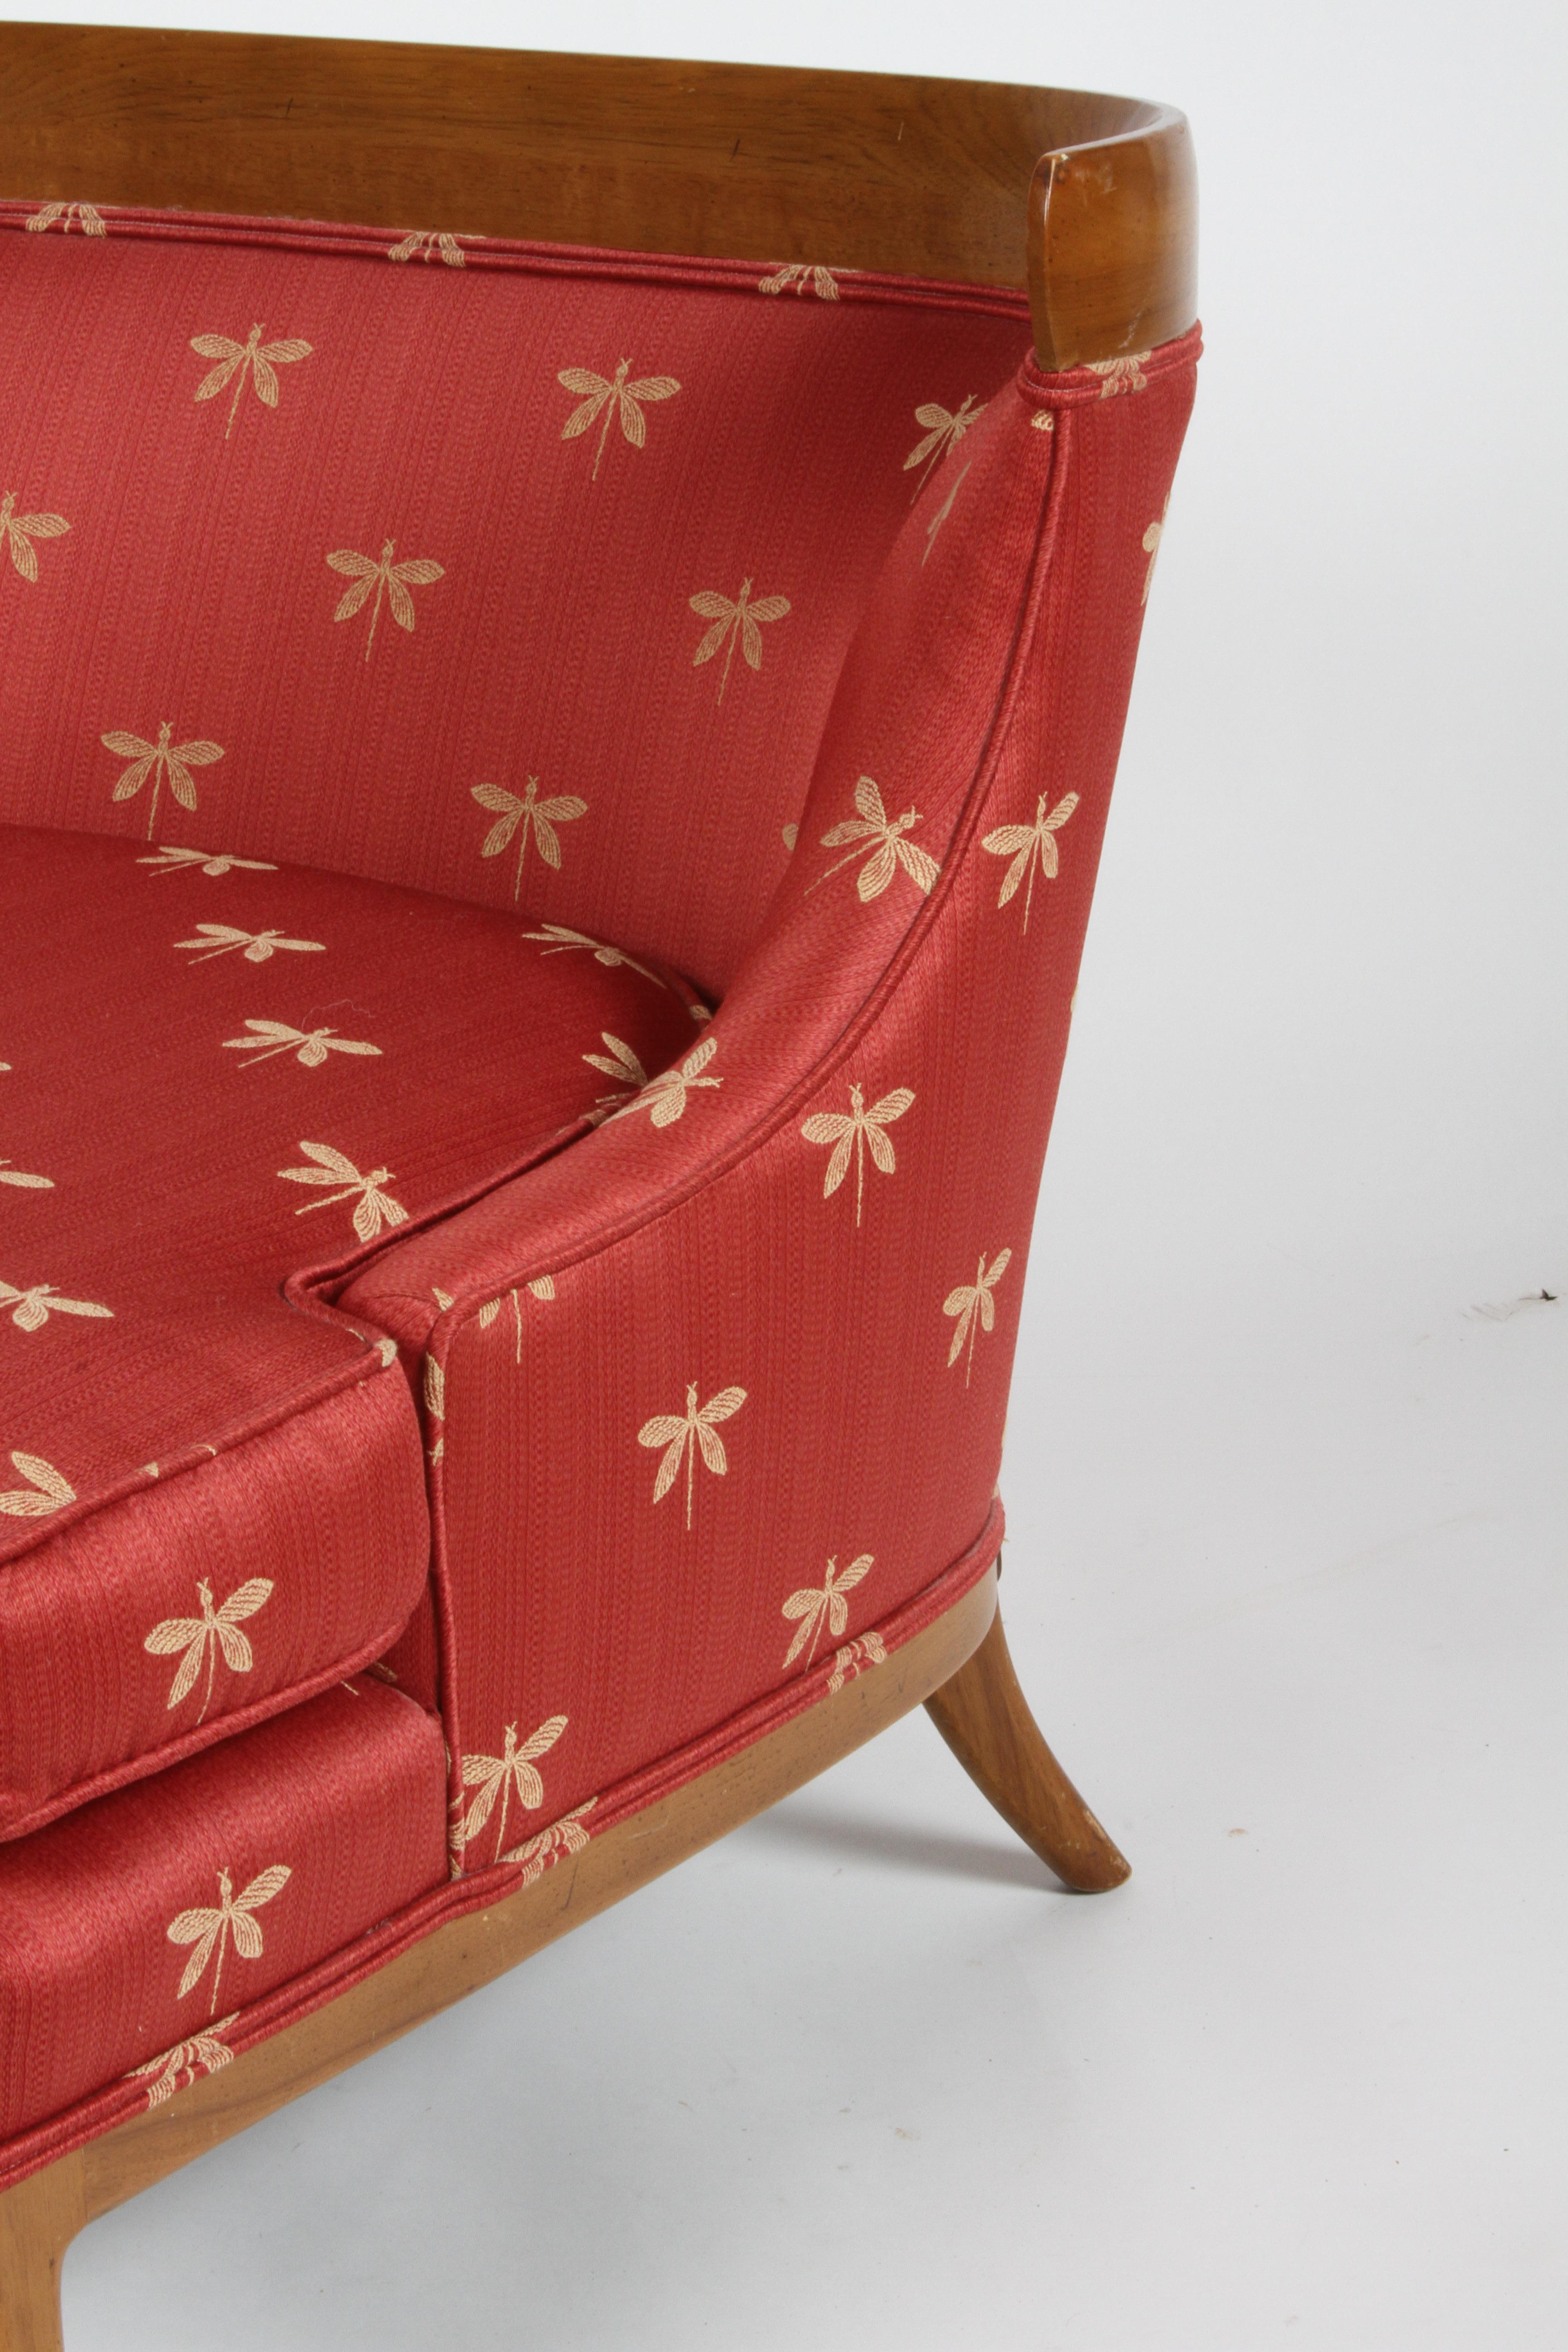 Elegant Tomlinson Sophisticate Slipper Chair by Erwin Lambeth 2